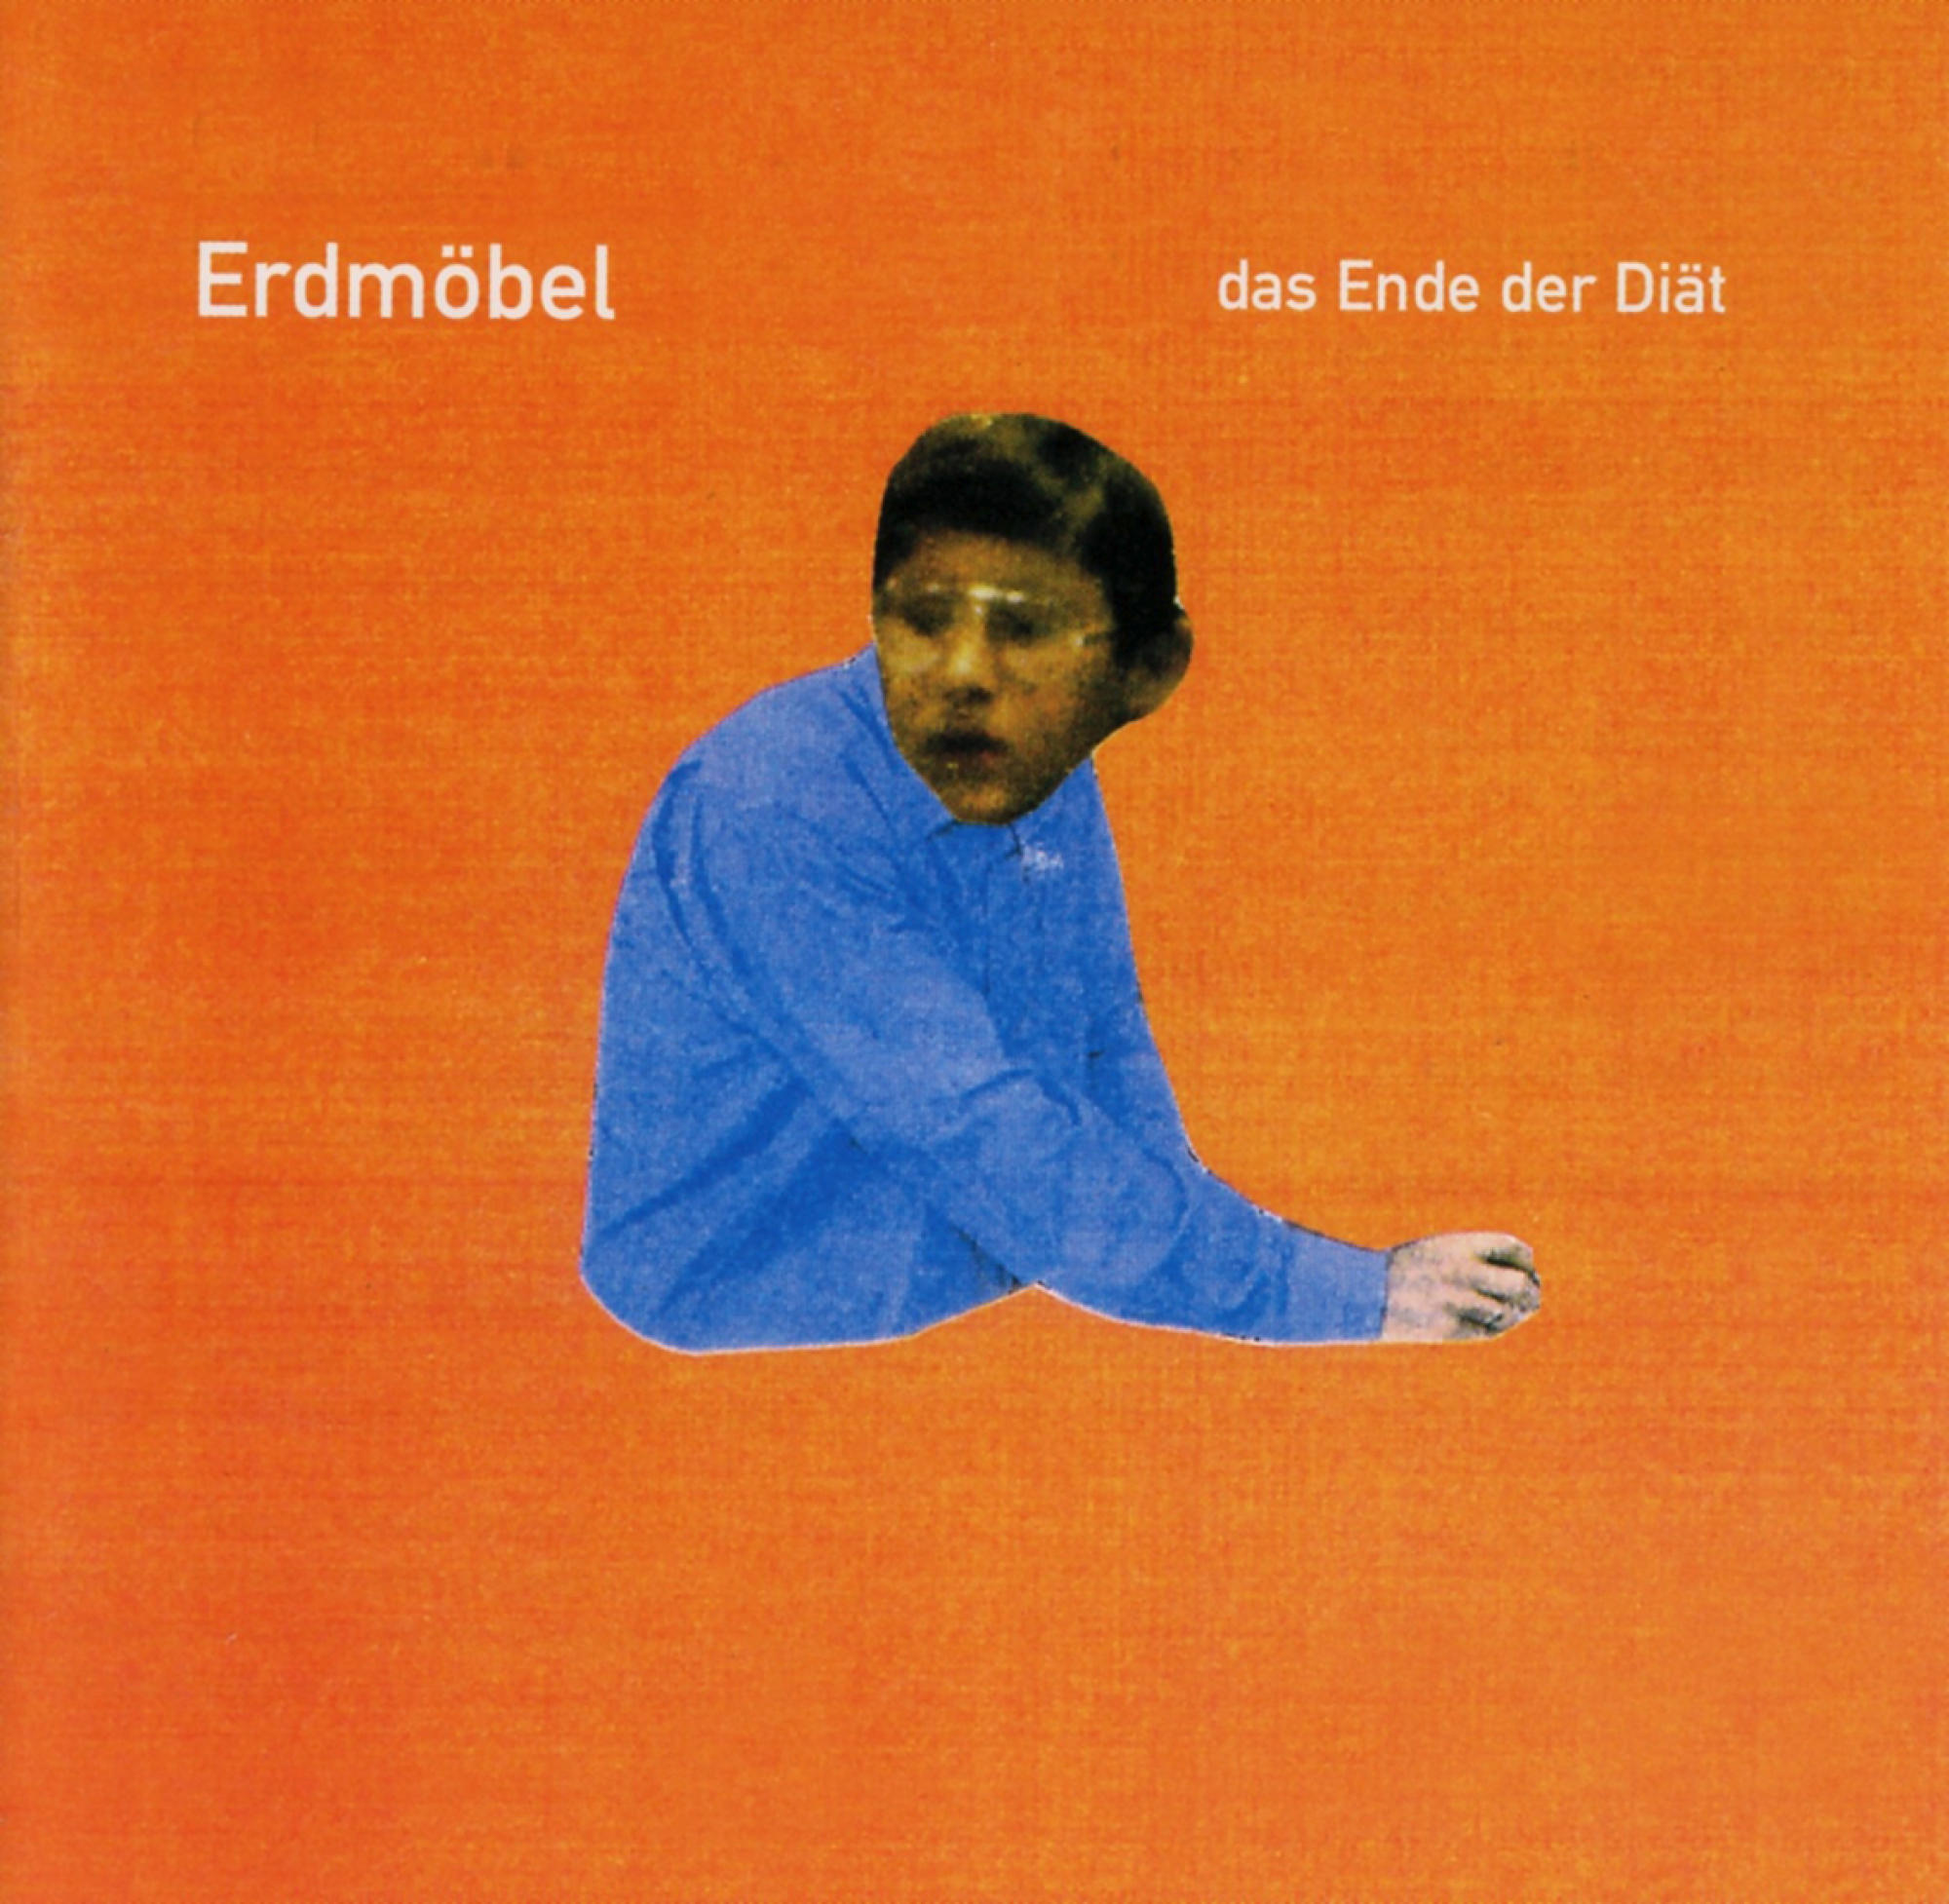 Erdmöbel Diät Der - (CD) - Ende